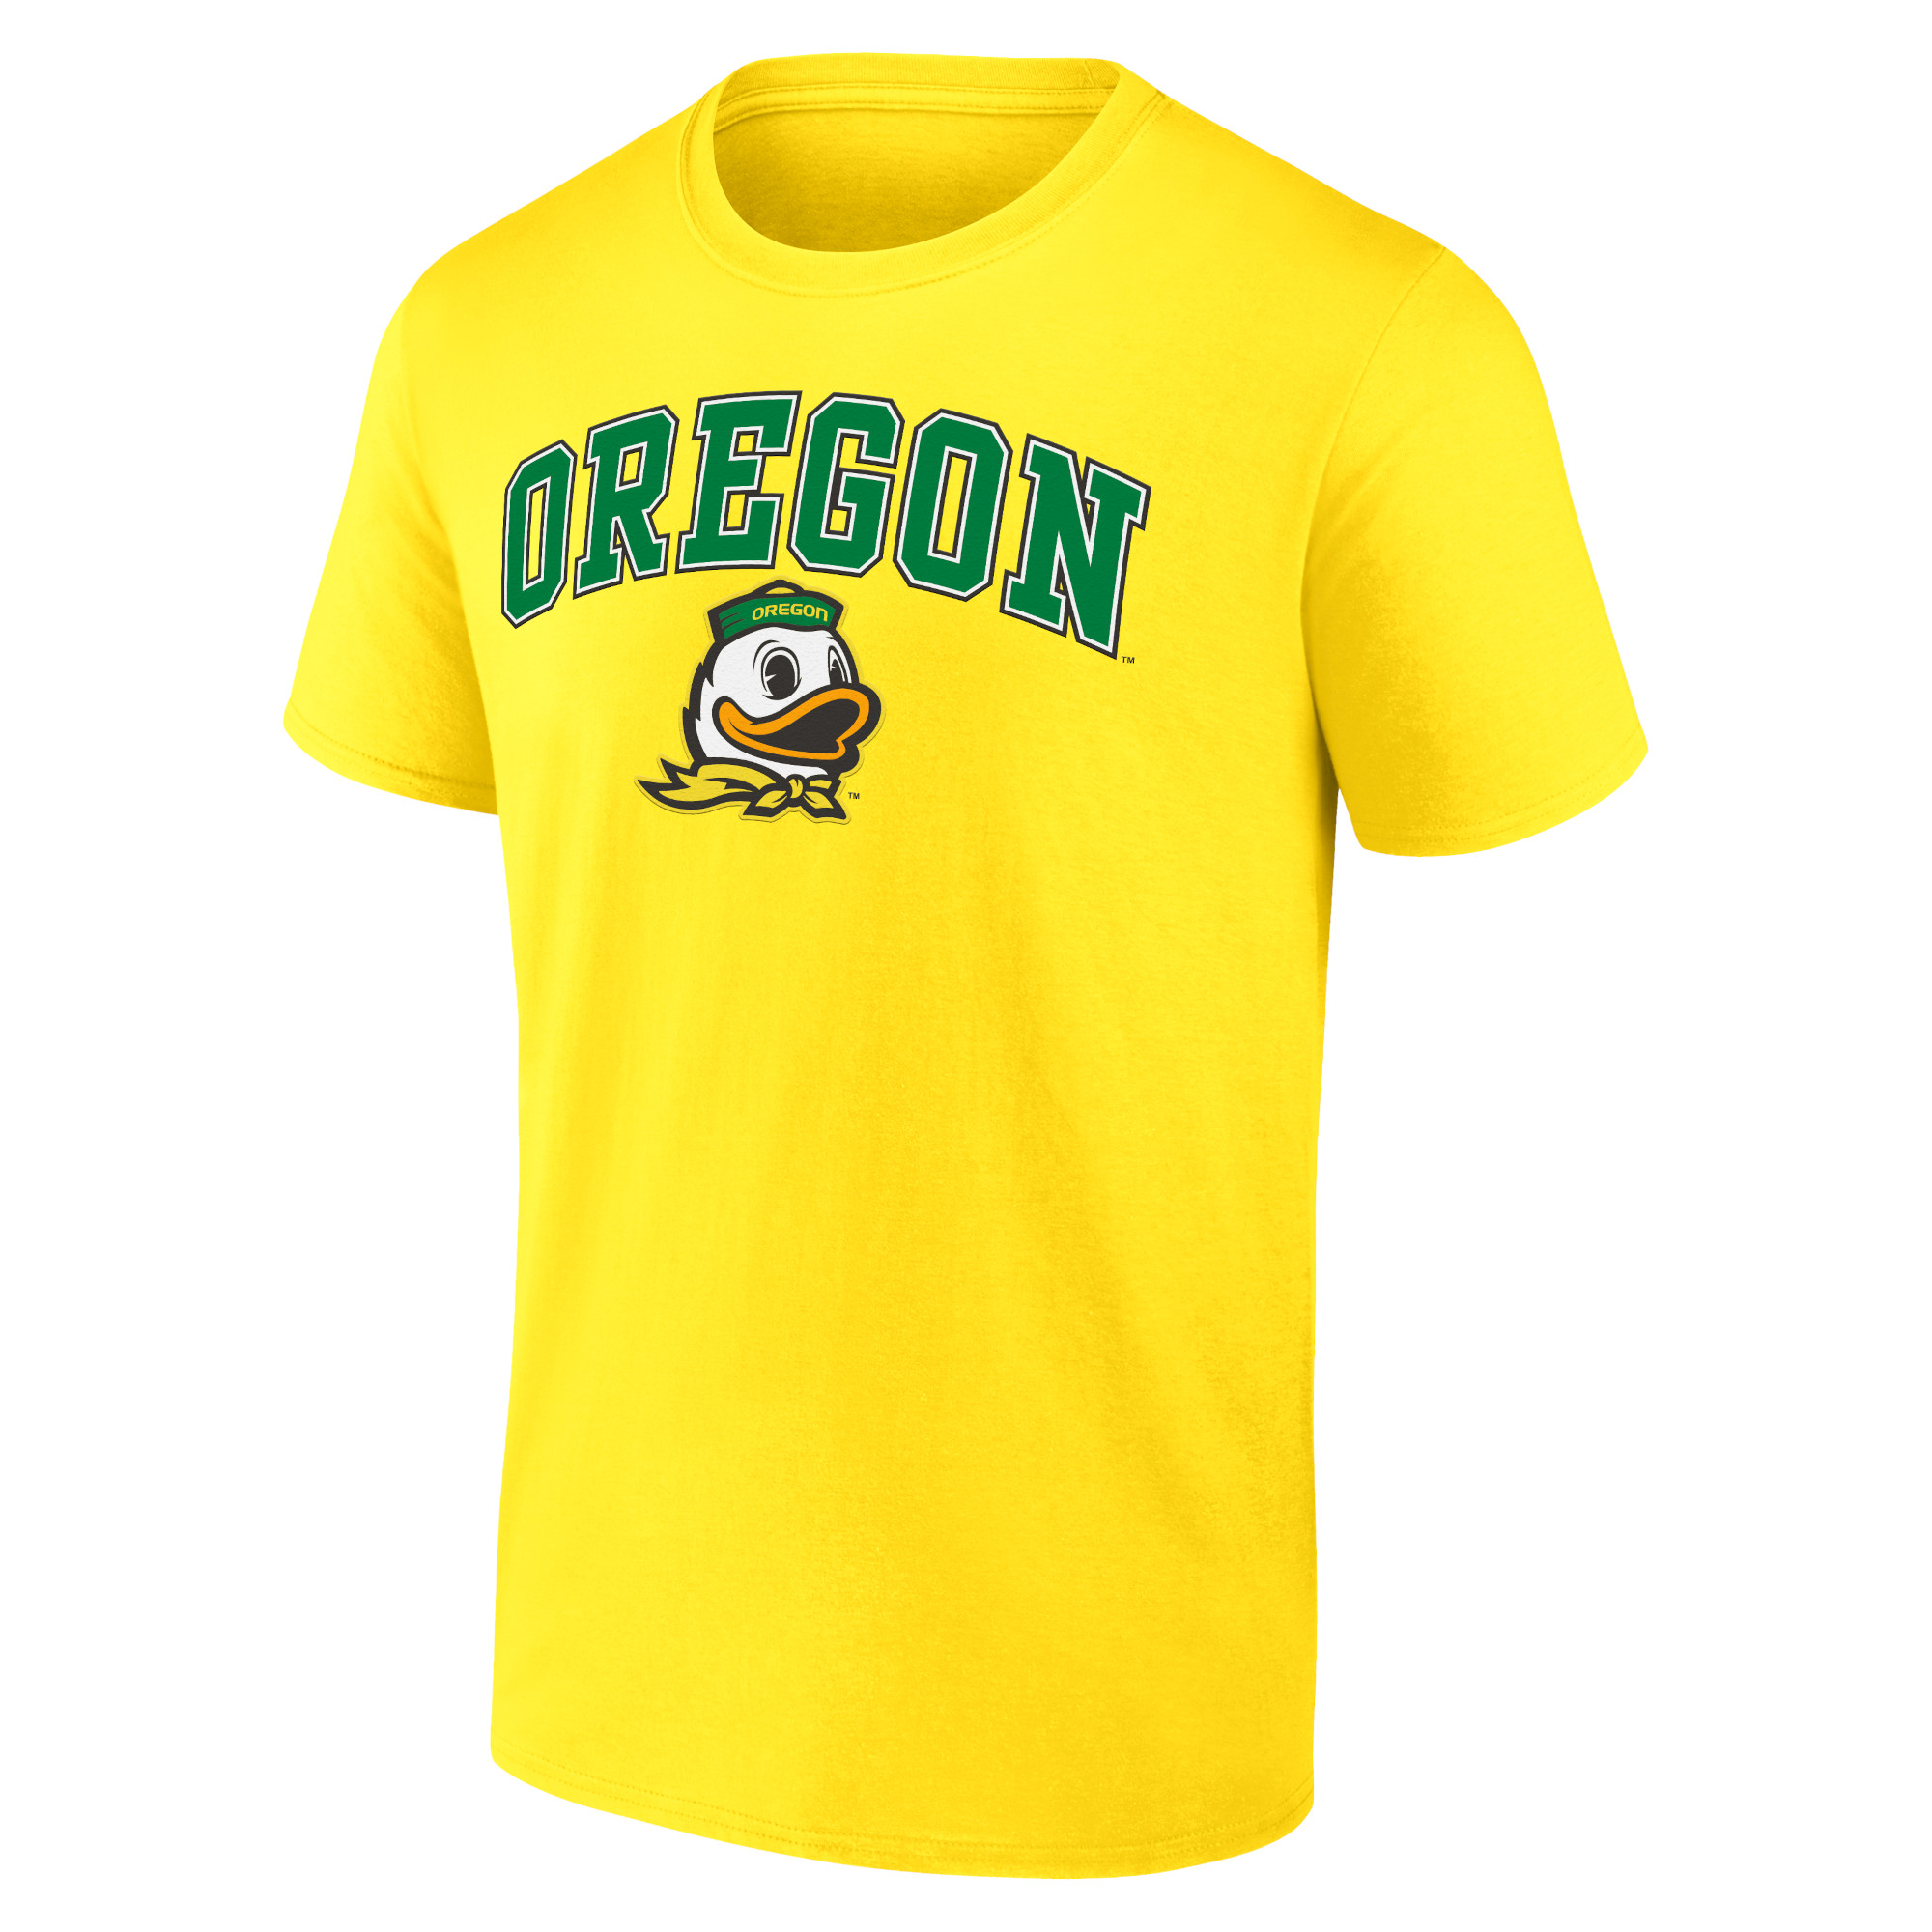 Men's Fanatics Branded Yellow Oregon Ducks Campus T-Shirt - image 2 of 3